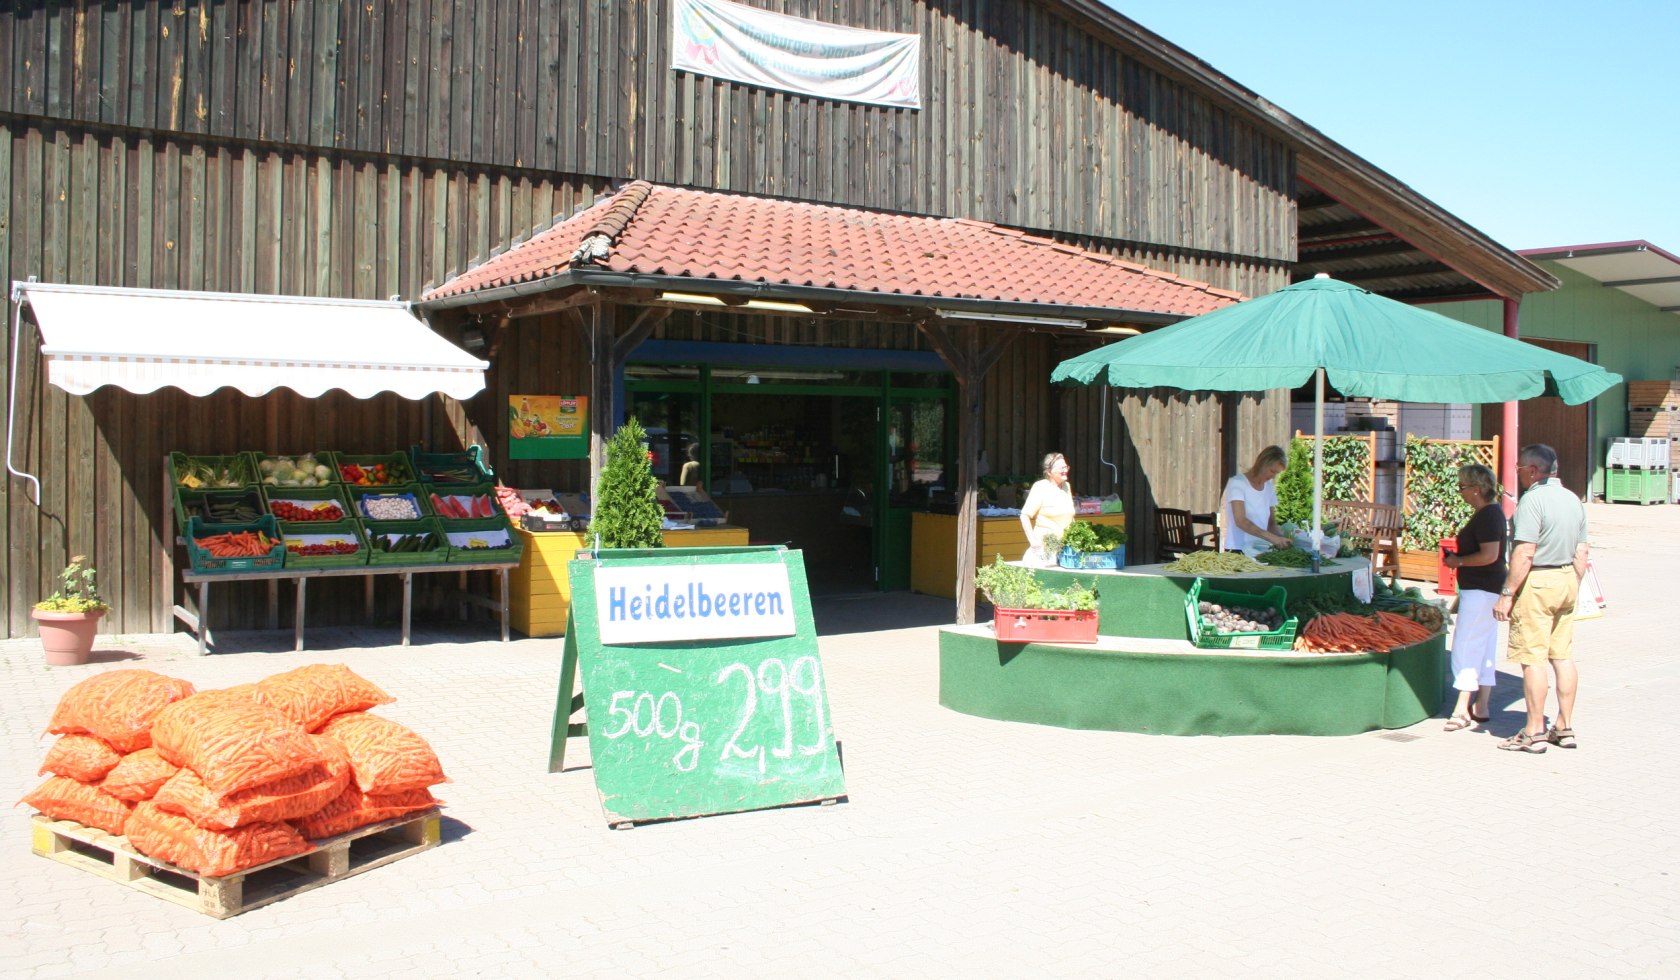 Gårdbutik med salg af blåbær i Mittelweser-regionen, © Mittelweser Touristik GmbH